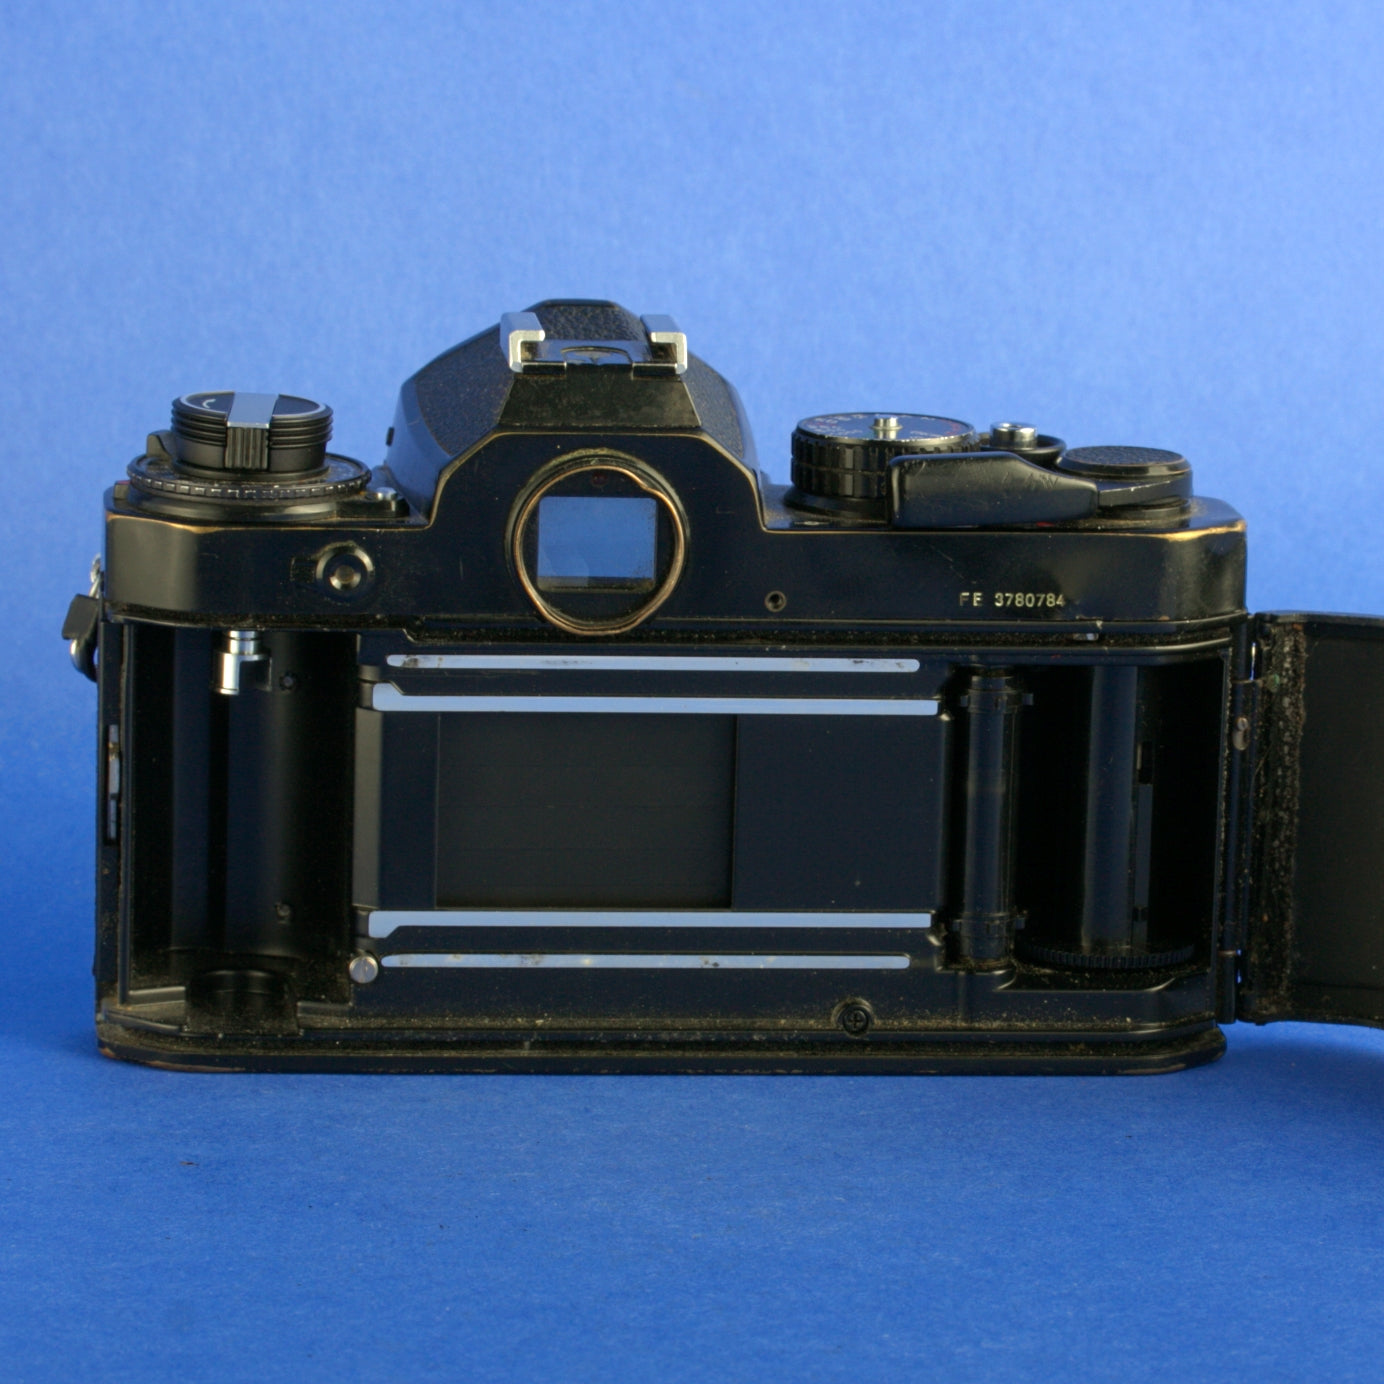 Nikon FE Film Camera Body